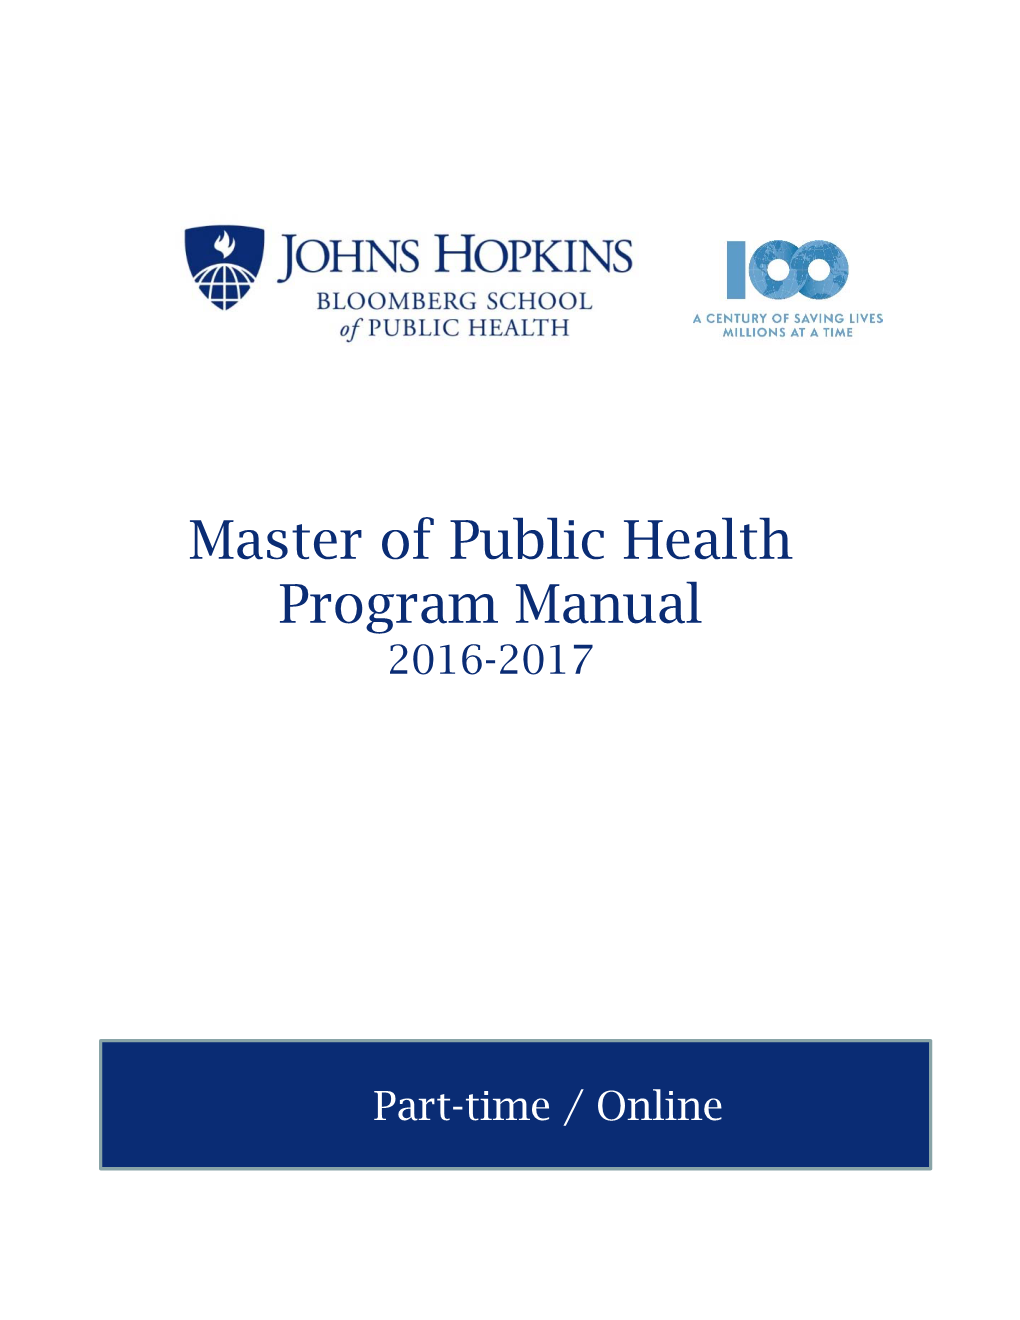 Master of Public Health Program Manual 2016-2017